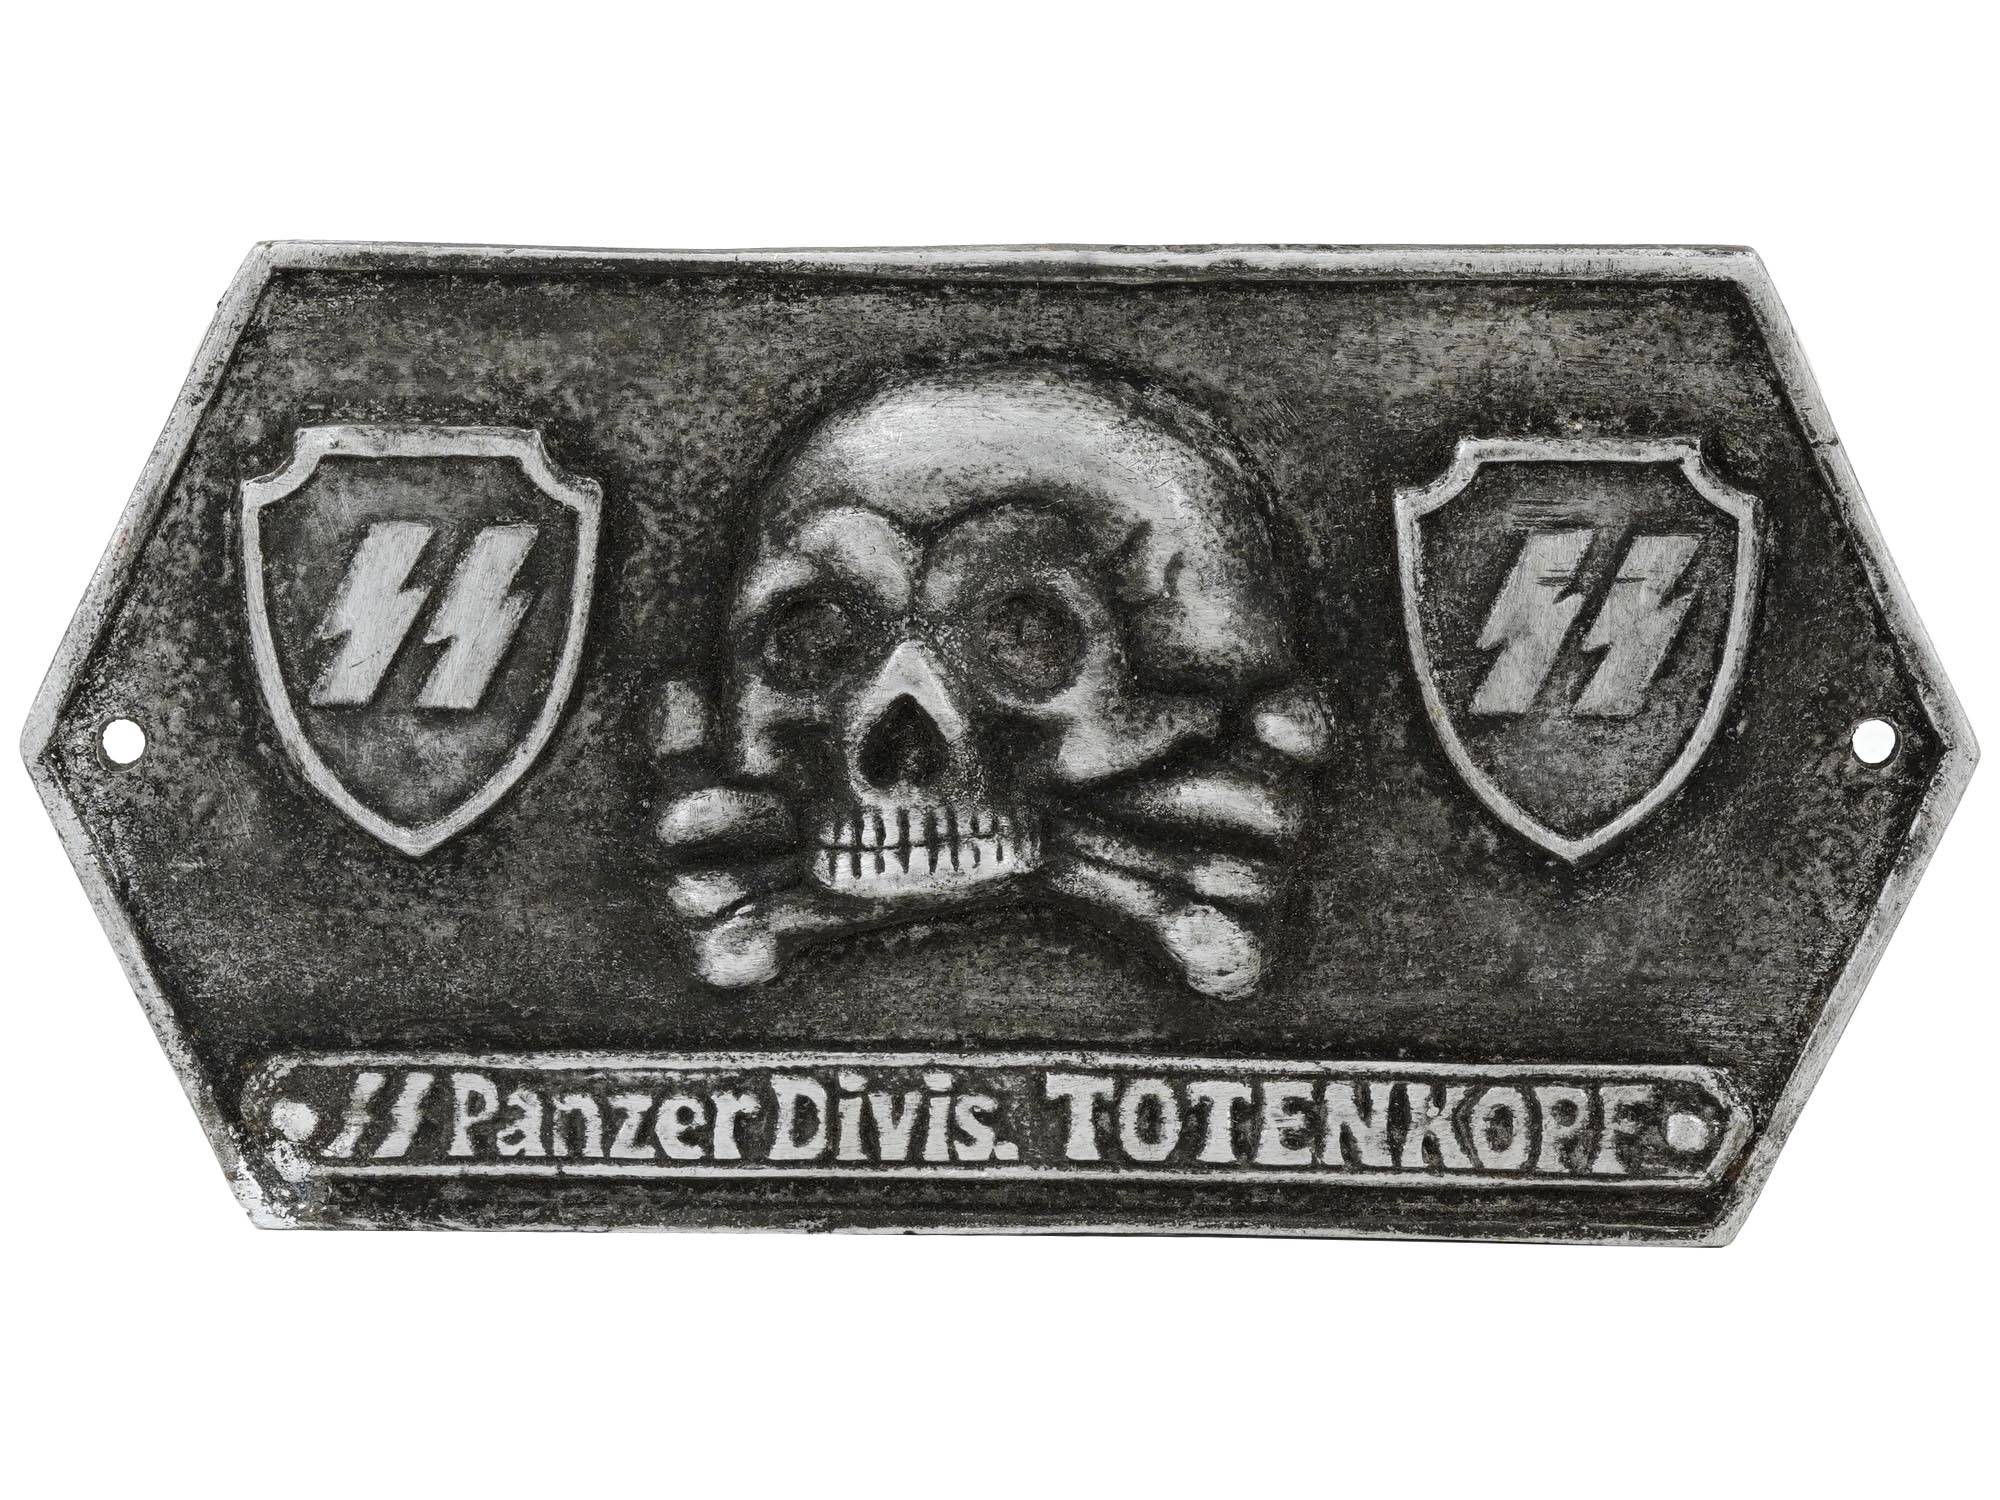 WWII GERMAN NAZI PANZER DIVISION TOTENKOPF SIGN PIC-0